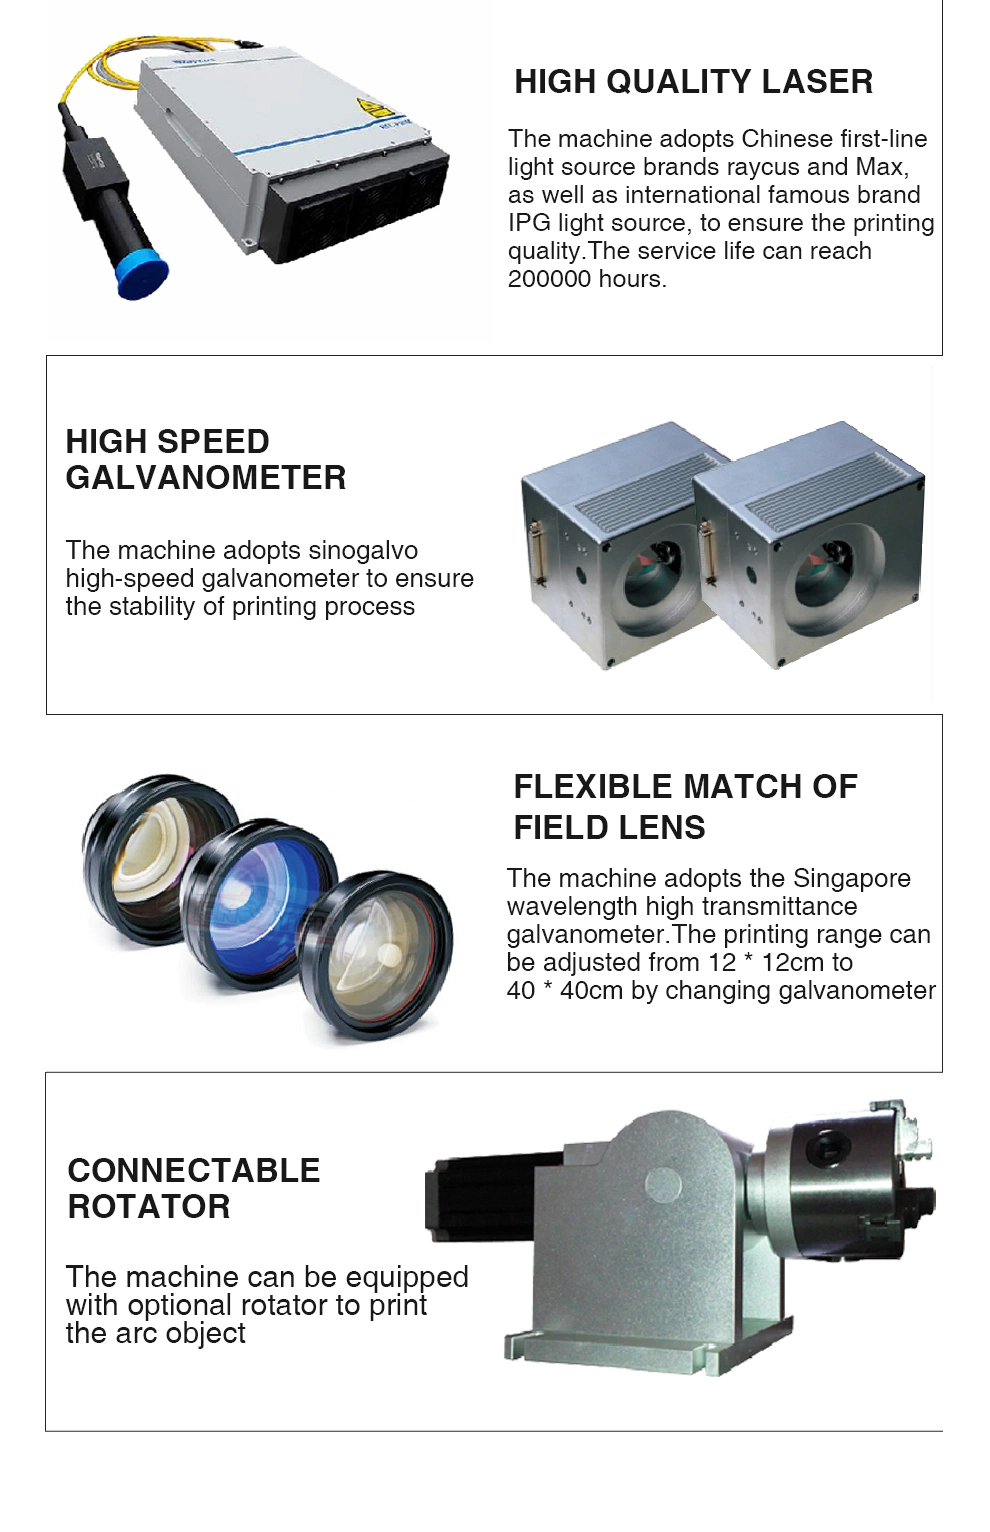 Faith Fiber Laser for Metal Marking Laser Welding CNC Engraving Machine Price